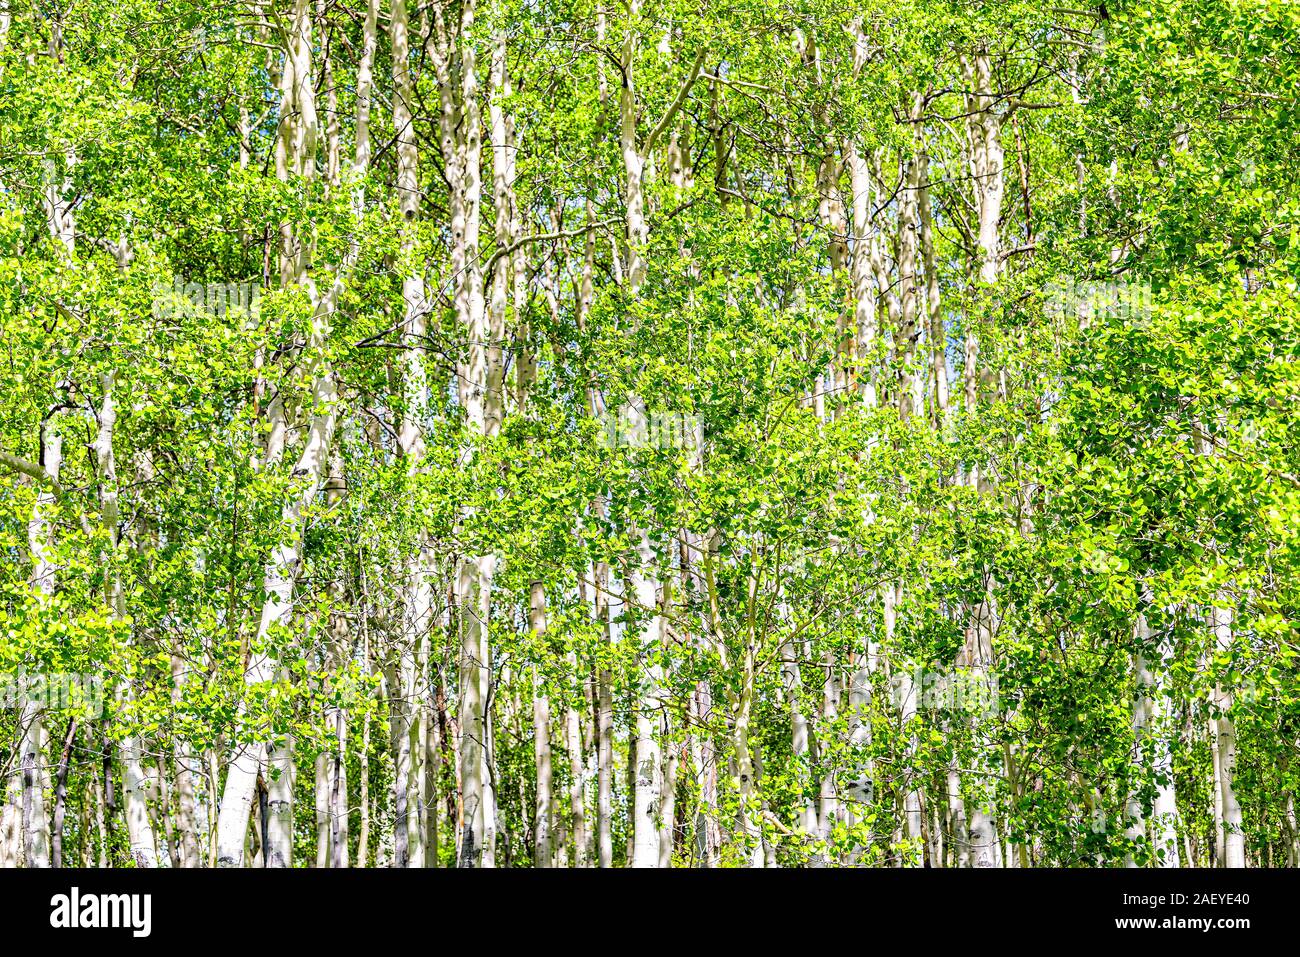 Crested Butte, Colorado Snodgrass Wanderweg im Sommer mit grünen Espe Wald Bäume grove Muster abstrakte closeup im Sonnenlicht Stockfoto